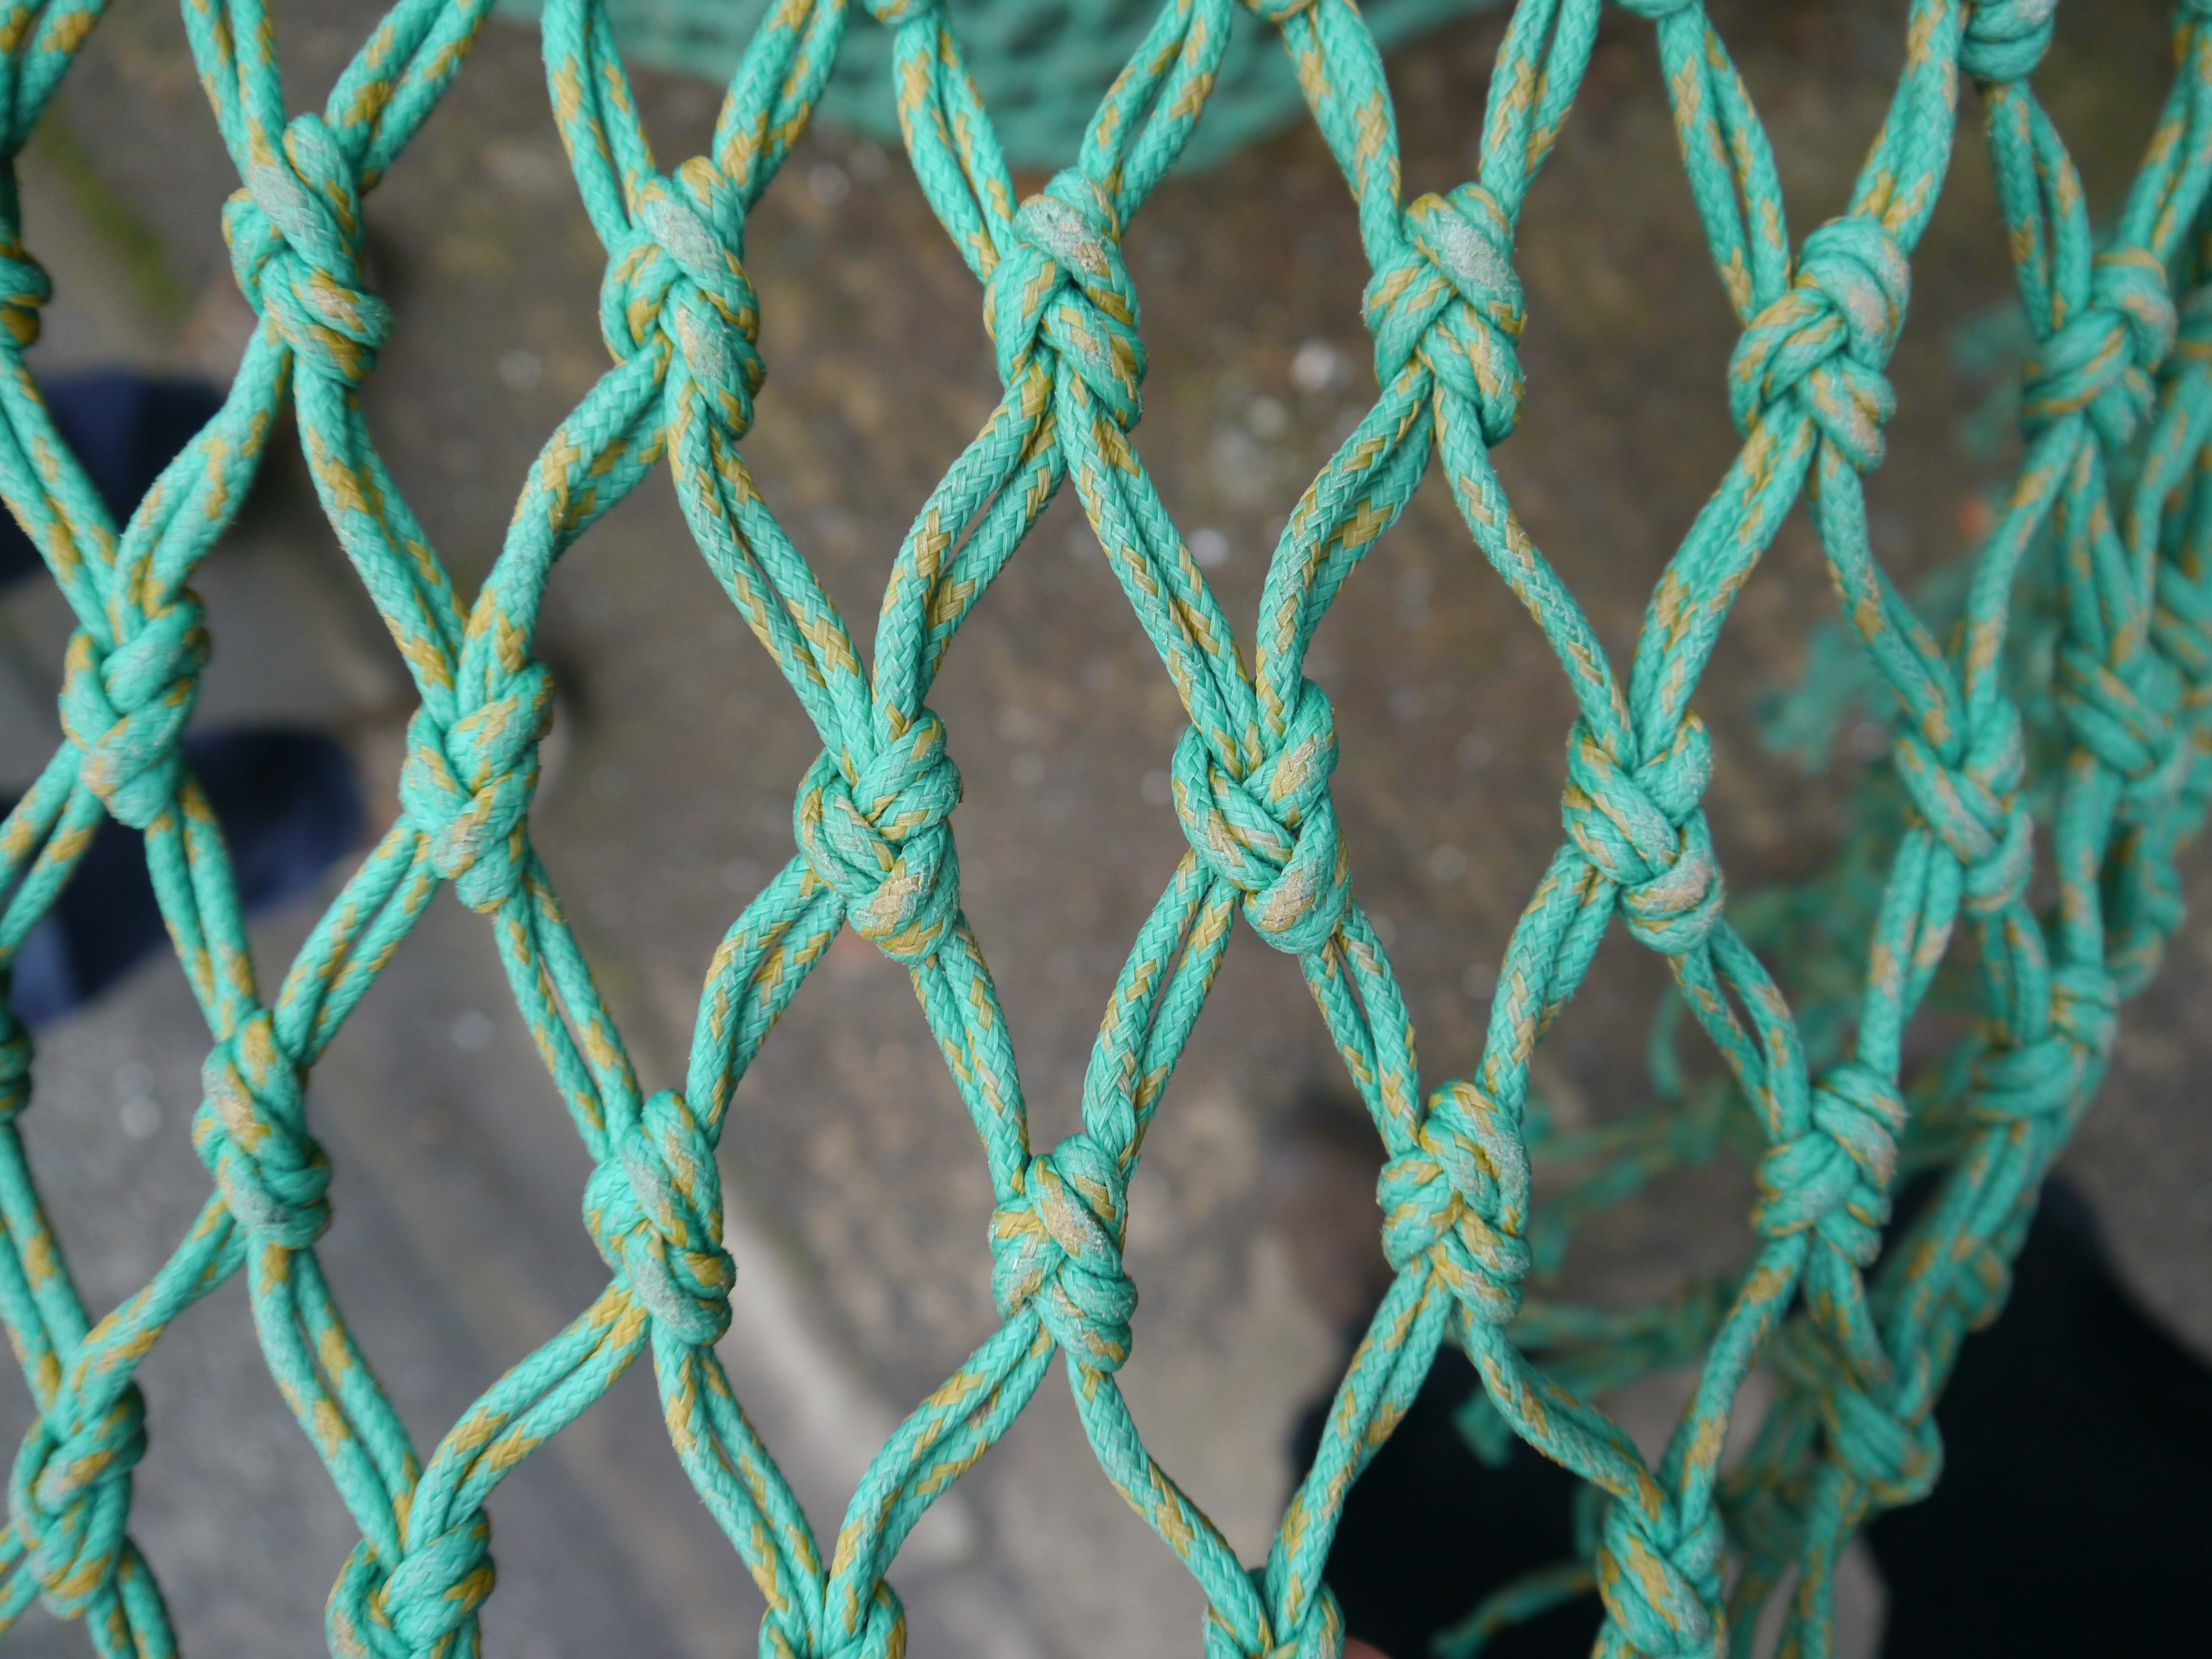 A close up of double diamond mesh netting